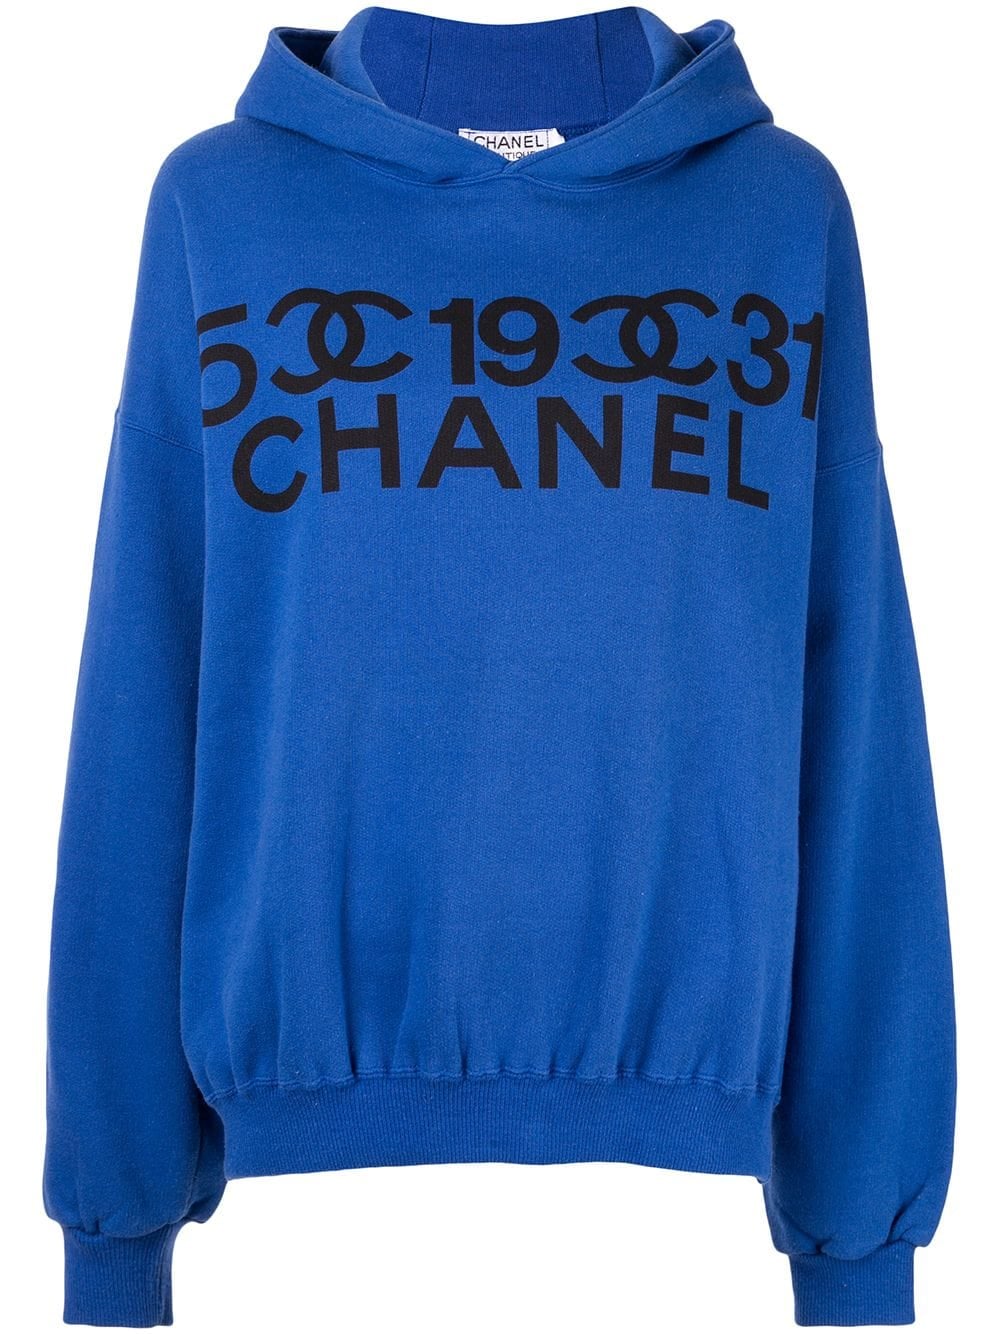 Chanel Vintage Chanel sweatshirt  Grailed